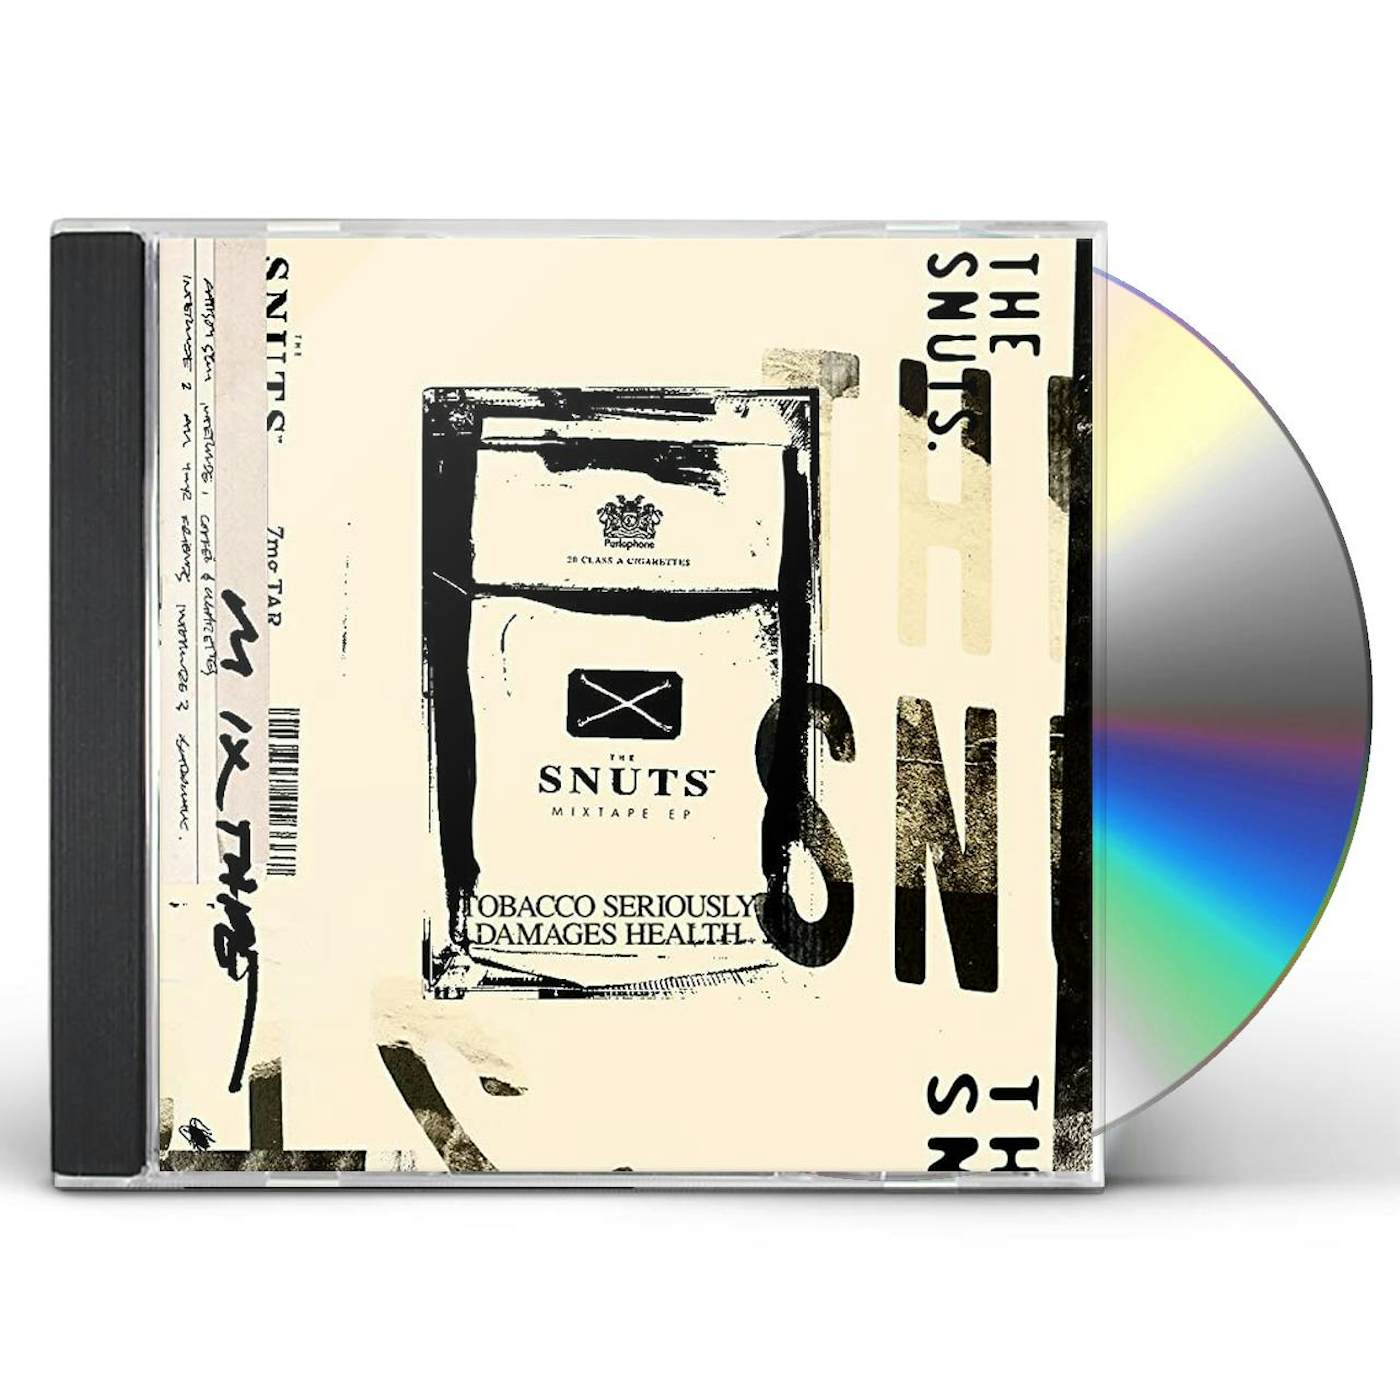 The Snuts MIXTAPE CD